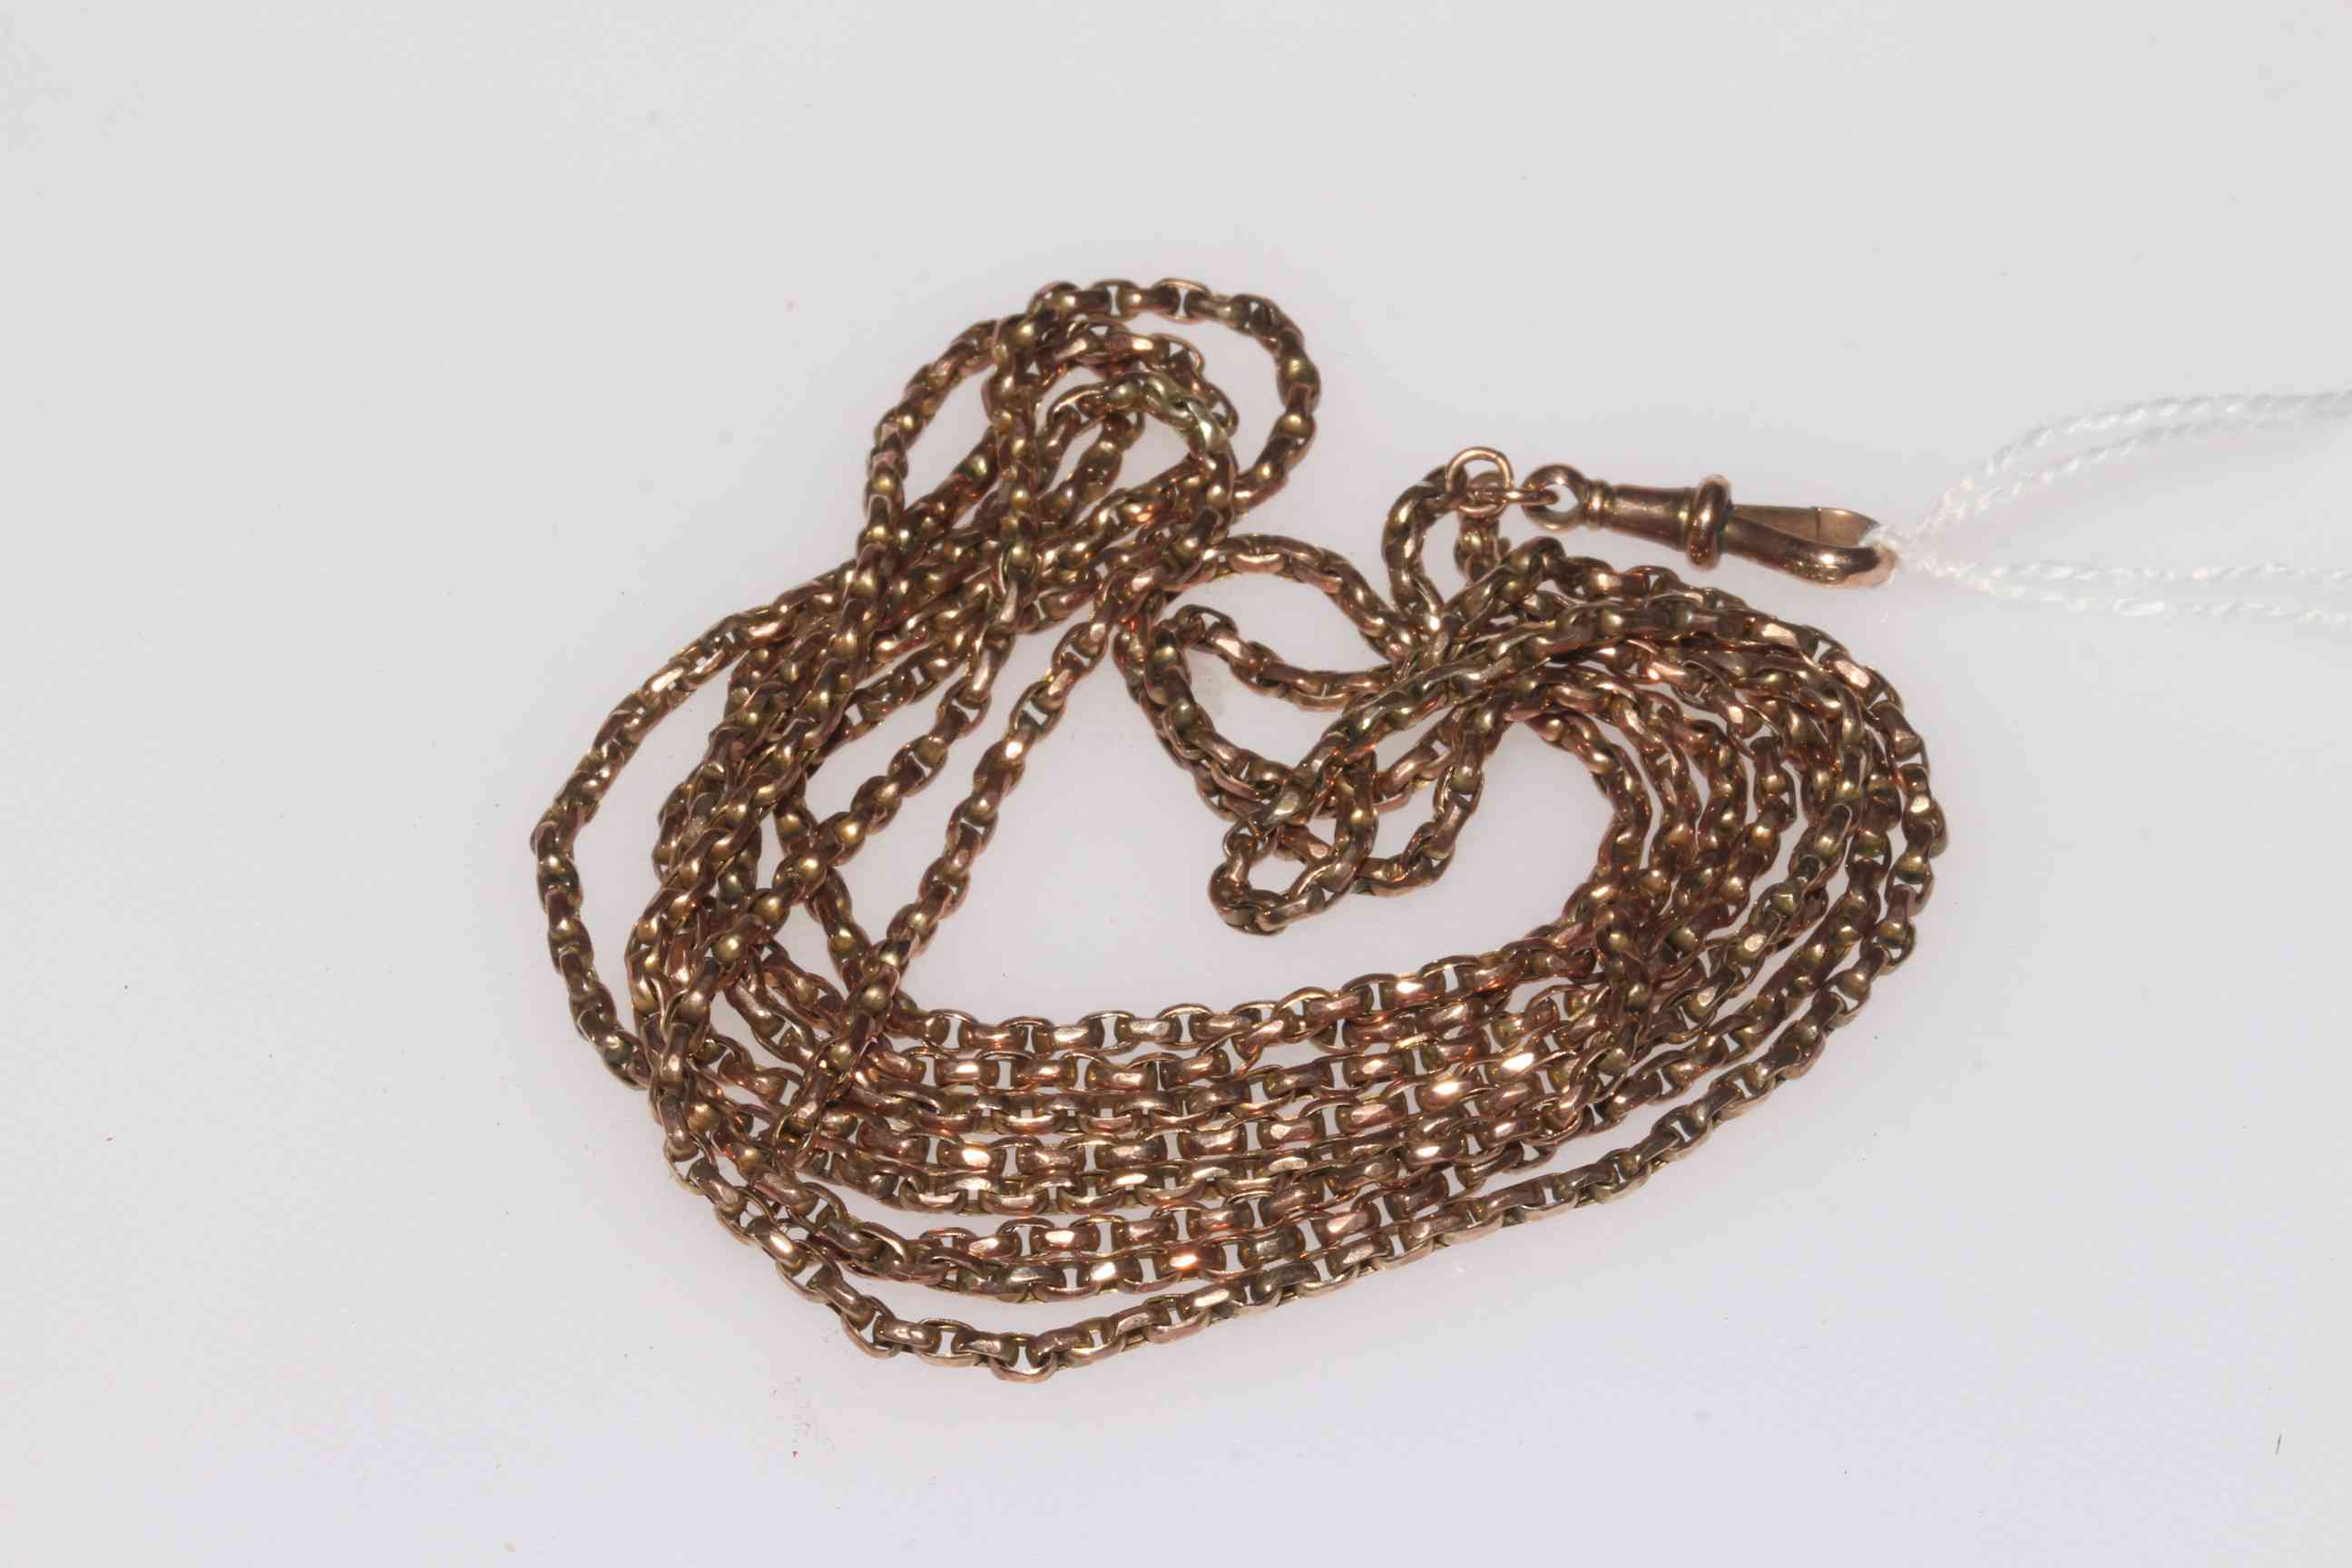 9 carat gold muff chain, 140cm length.